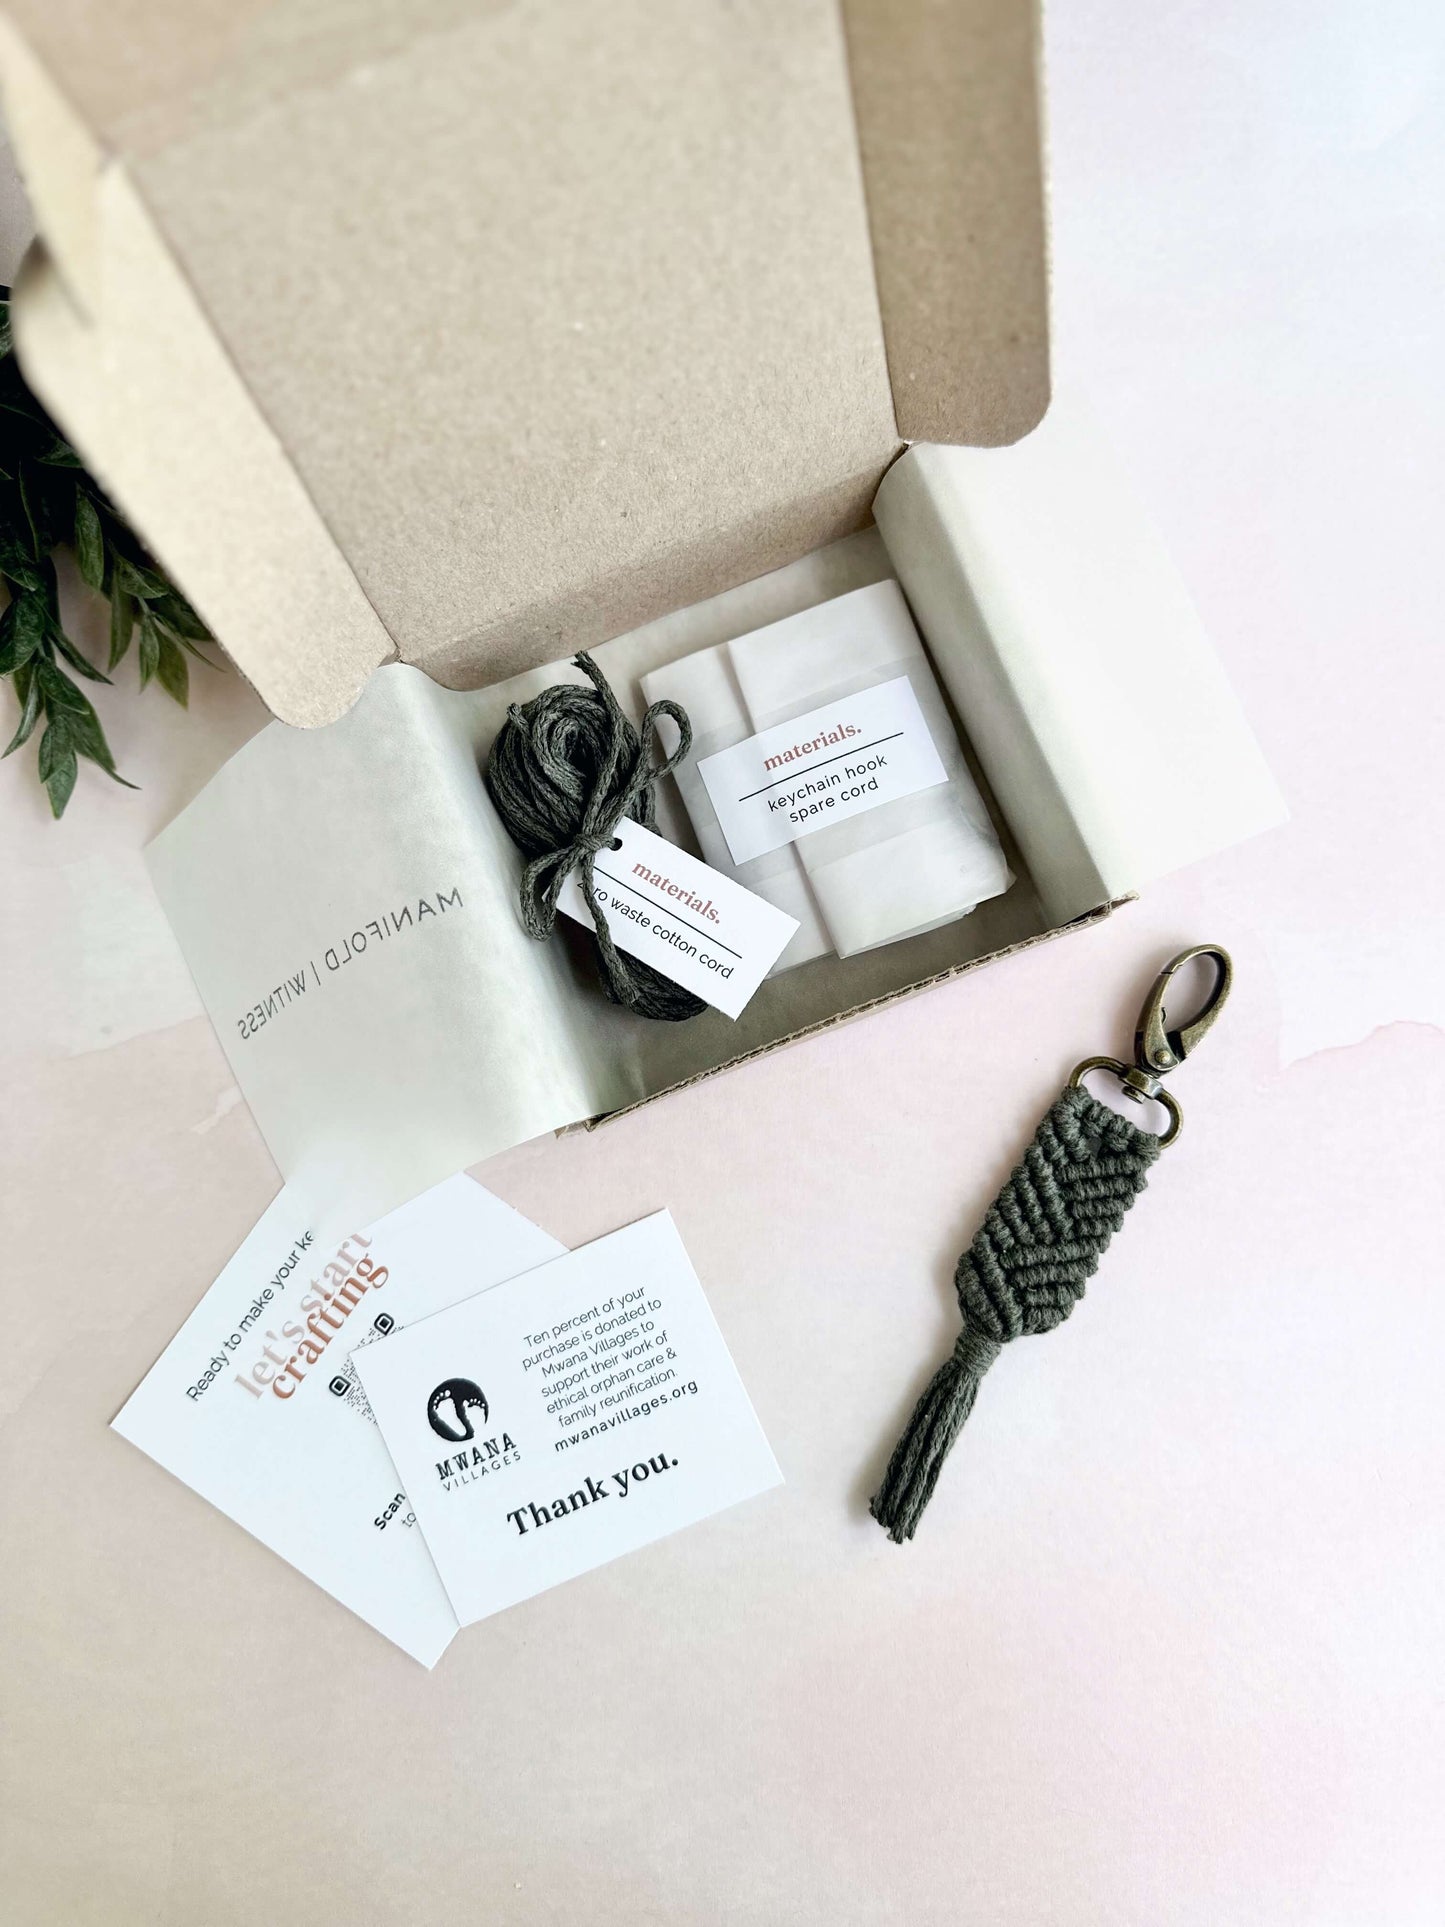 DIY Macrame Kit | Cotton Keychain | Quinn